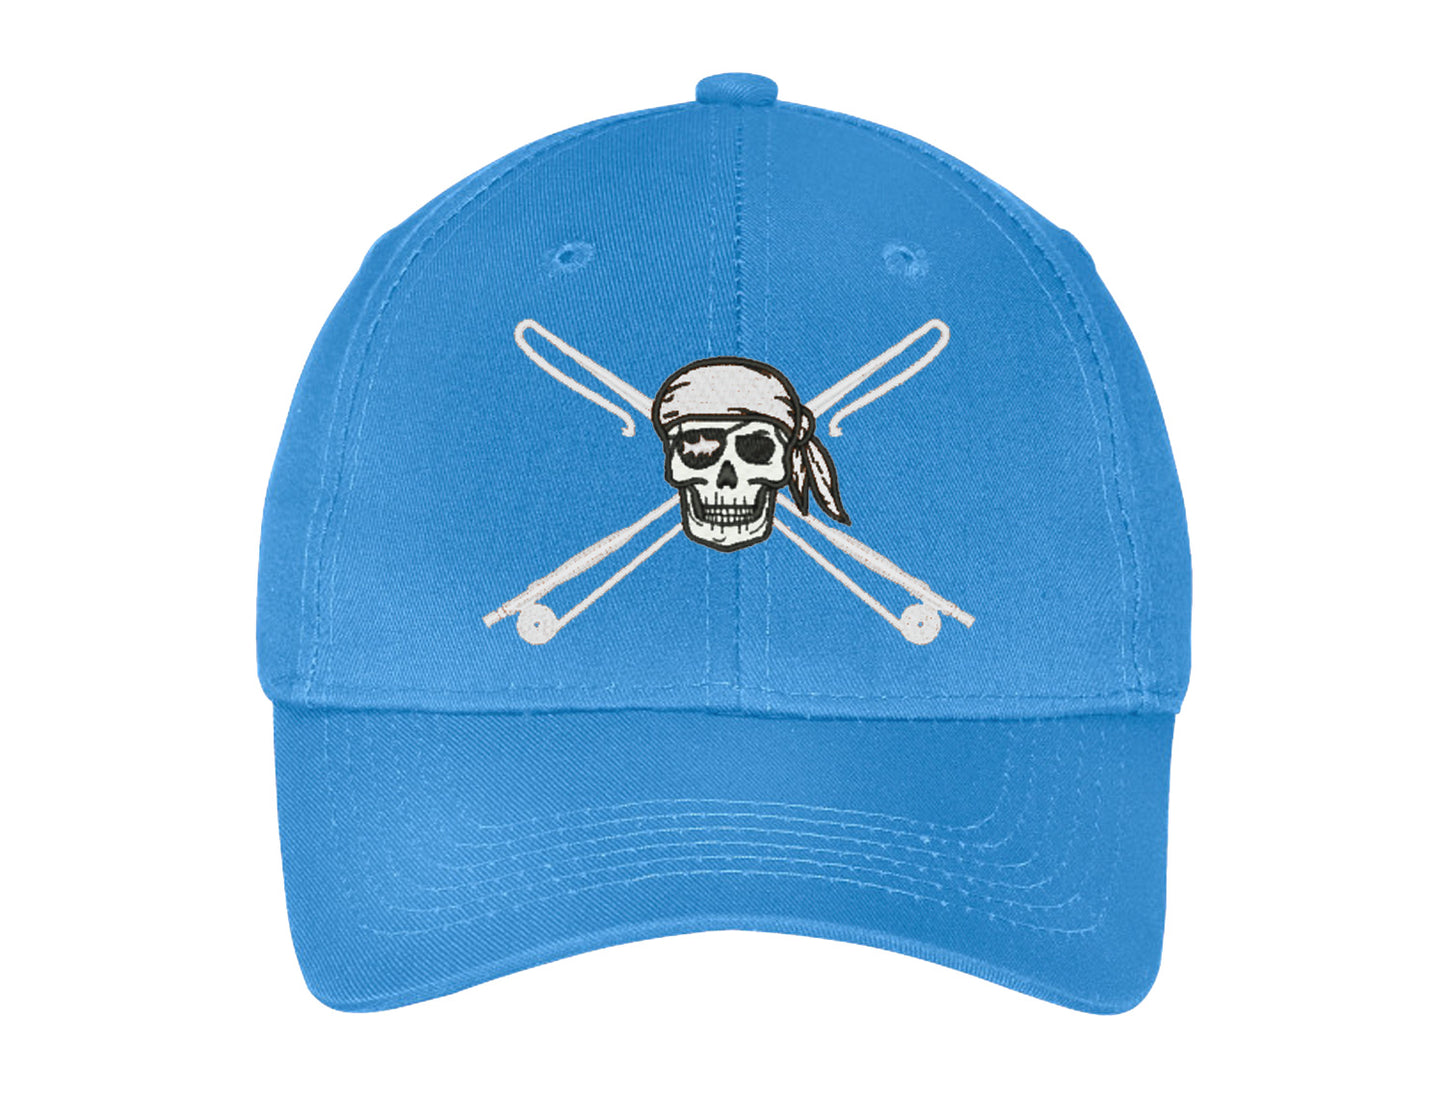 Youth Fishing Hats with Reel Fishy Pirate Skull & Rods Logo - Carolina Blue